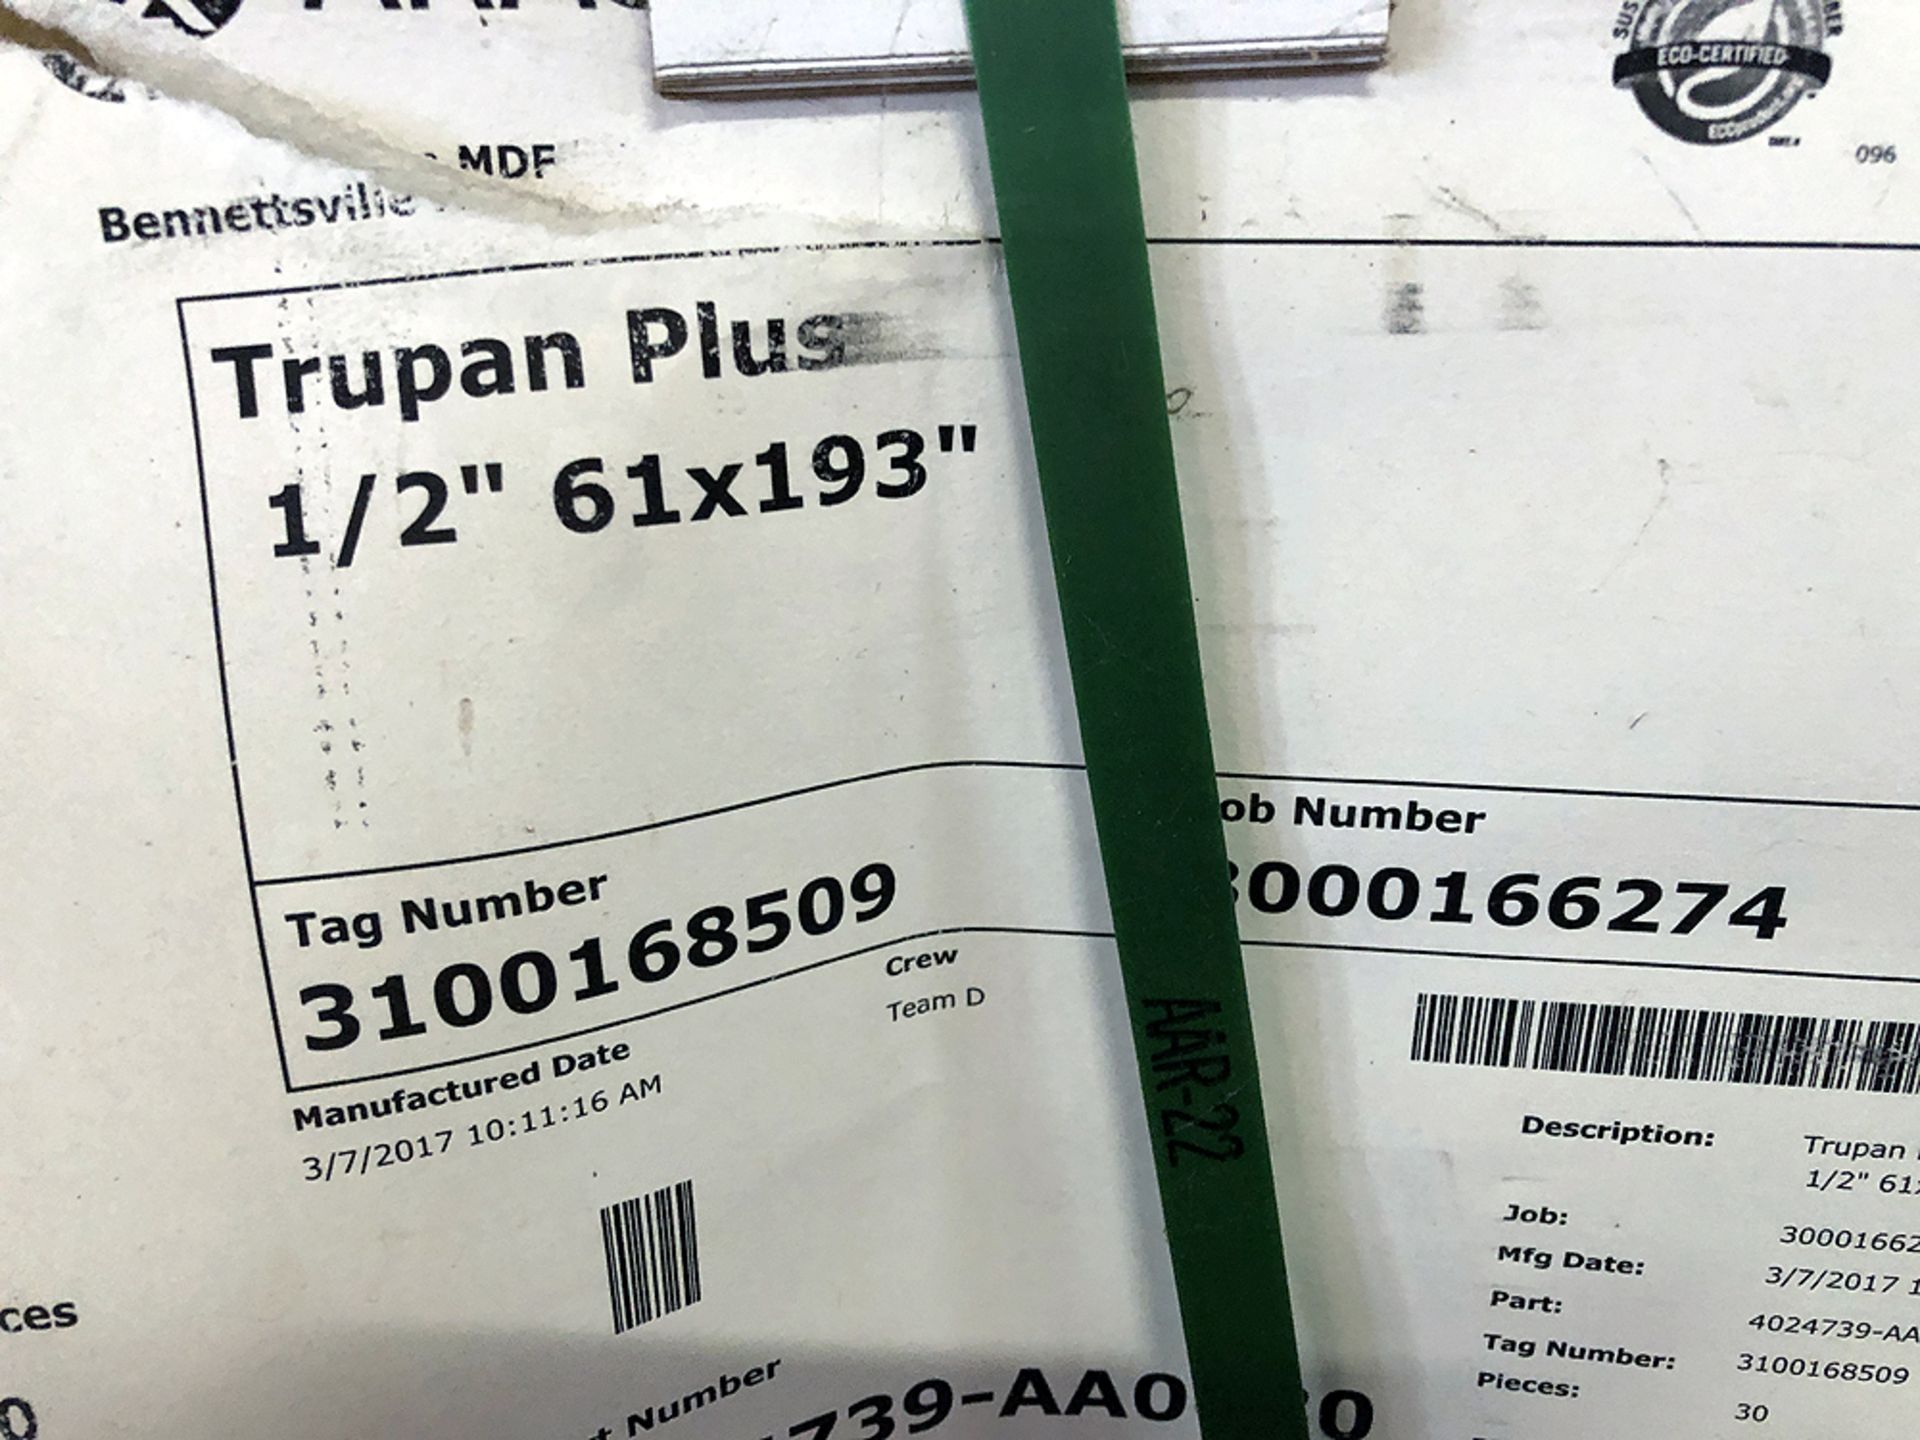 Trupan Plus, Bennettsville MDF, 1/2" x 61" x 193" - Image 2 of 4